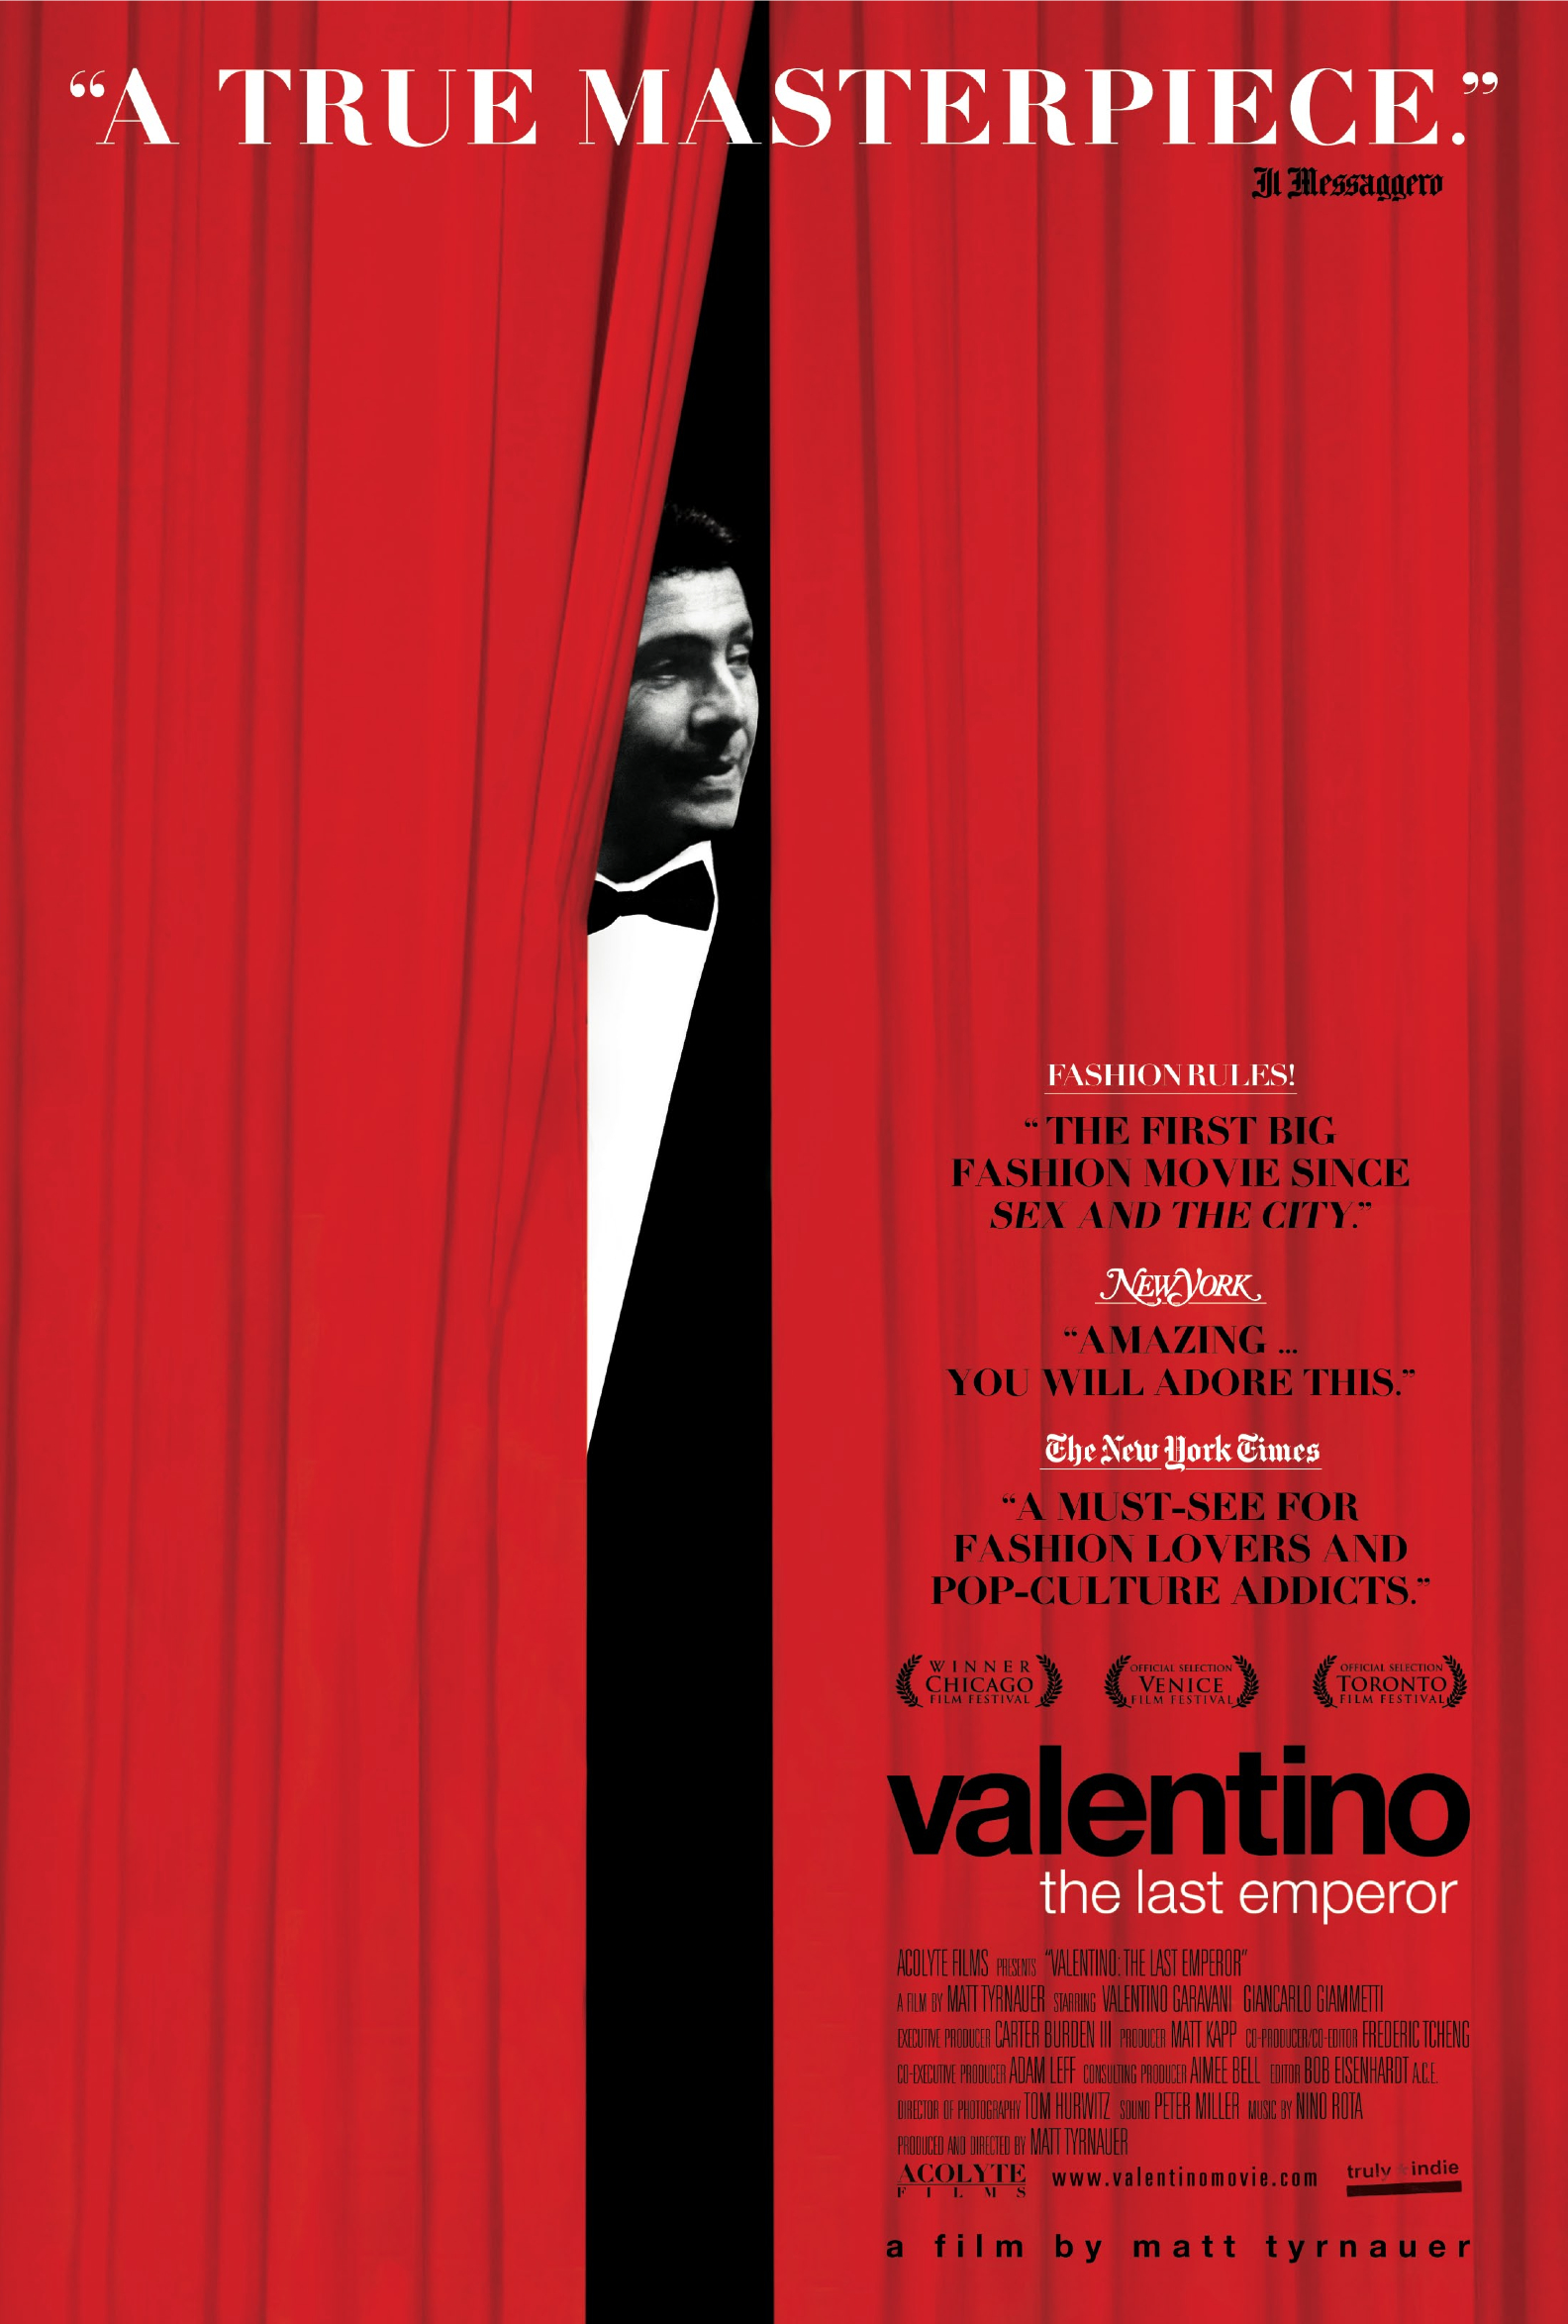 valentino-11x17-200dpi